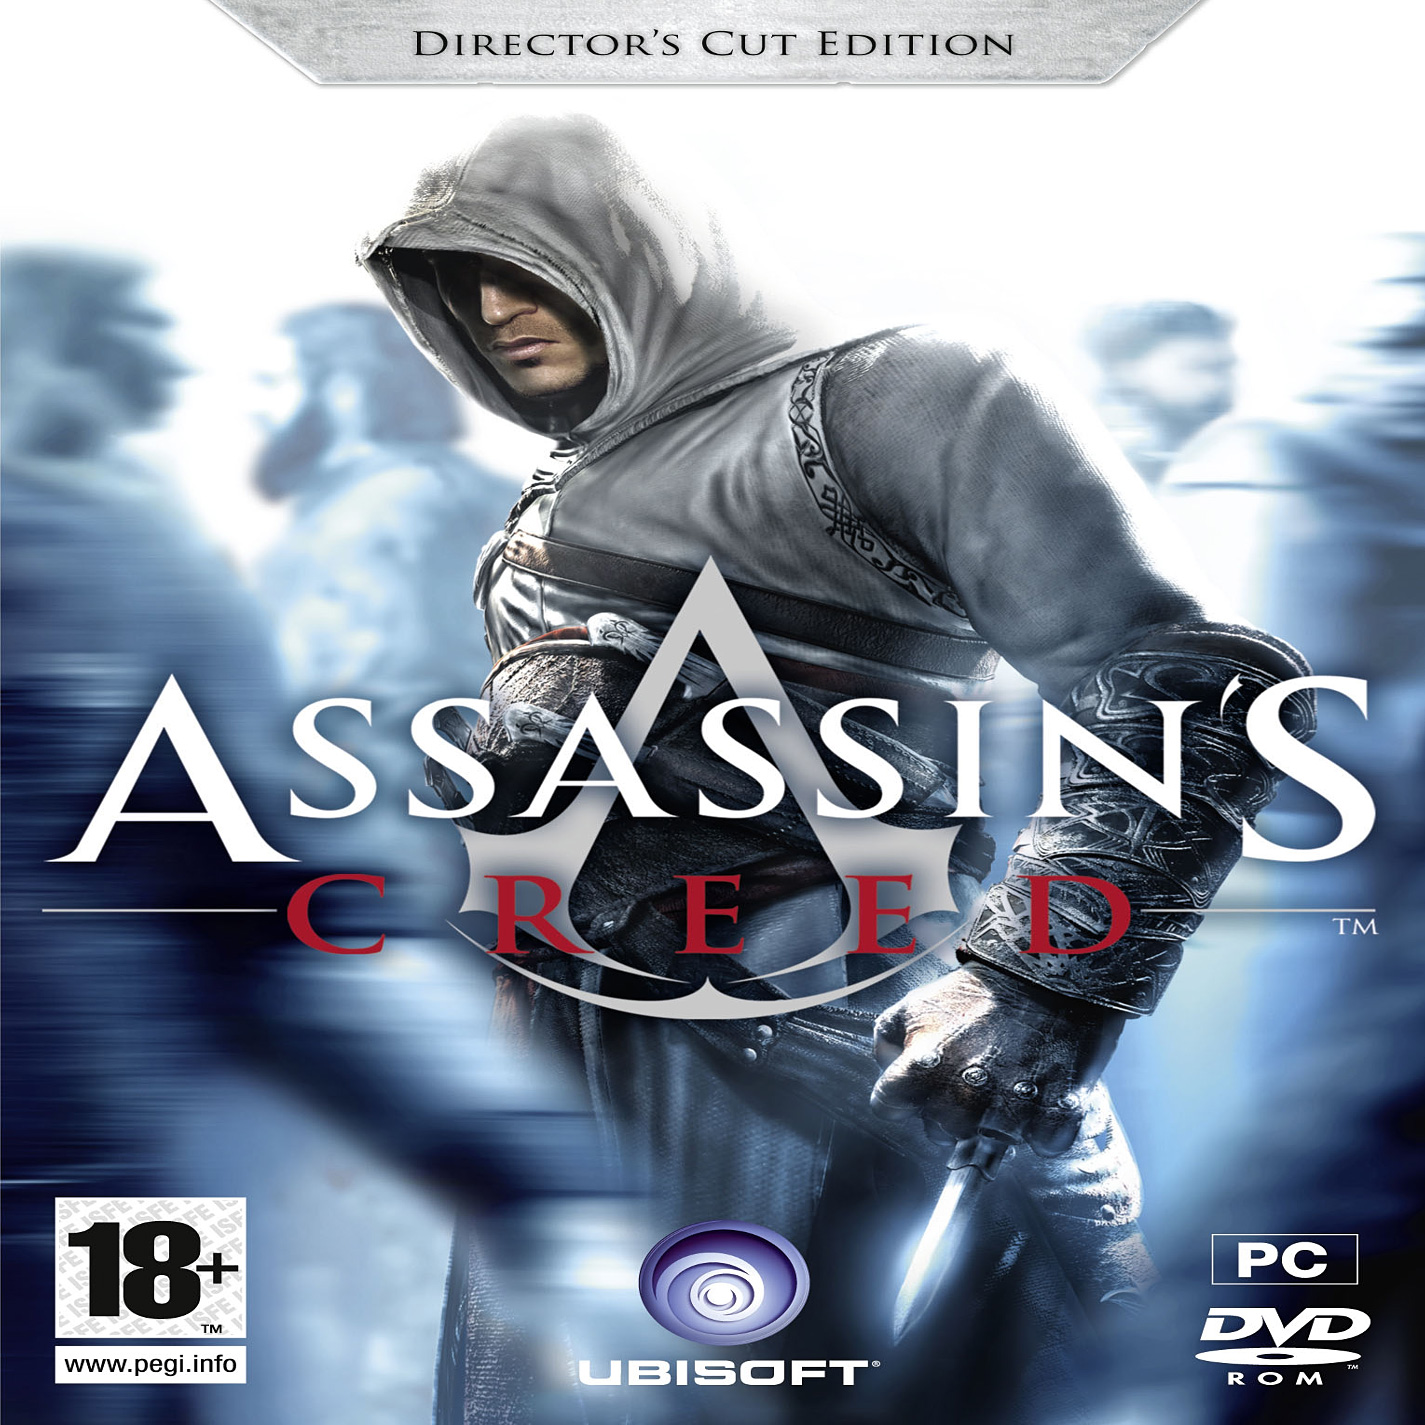 Assassins Creed - pedn CD obal 2